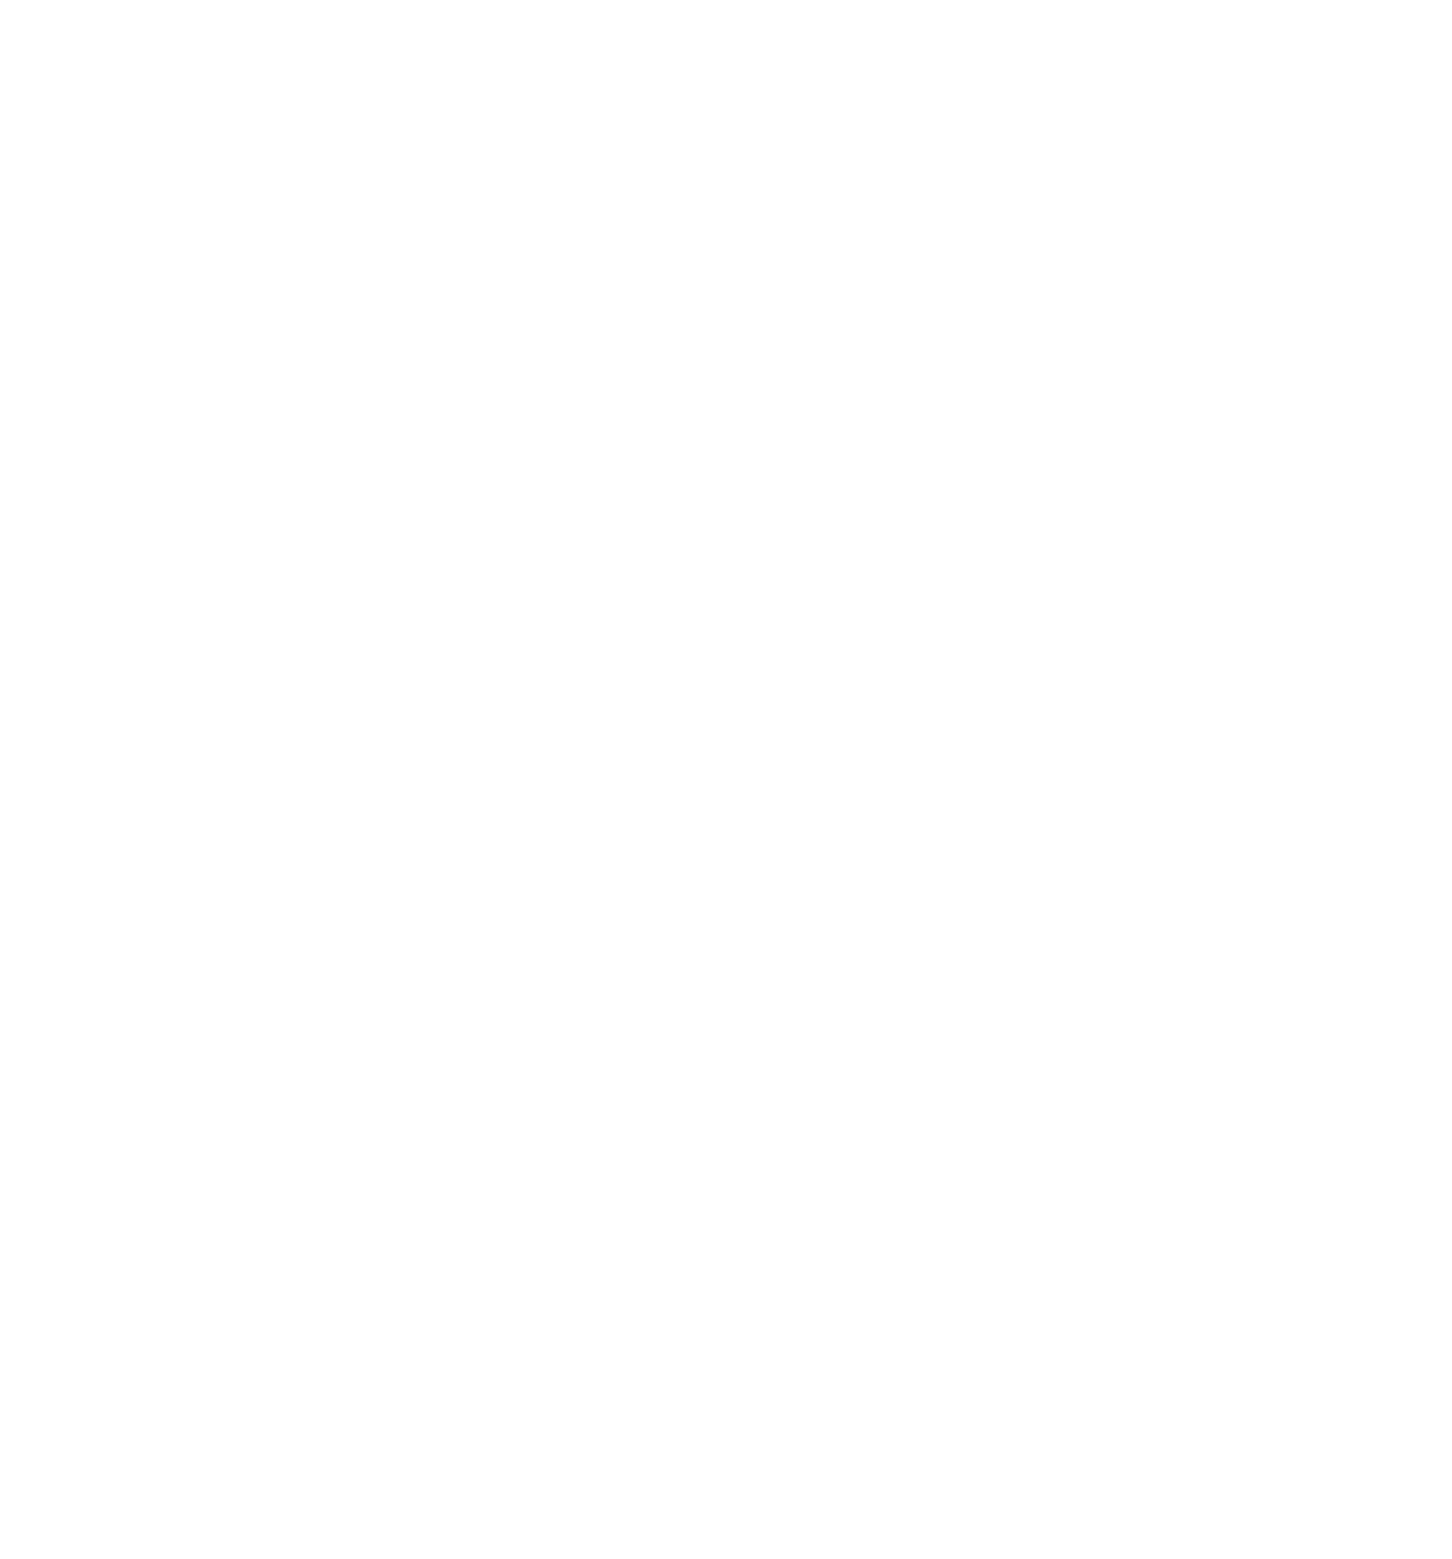 Cementir logo for dark backgrounds (transparent PNG)